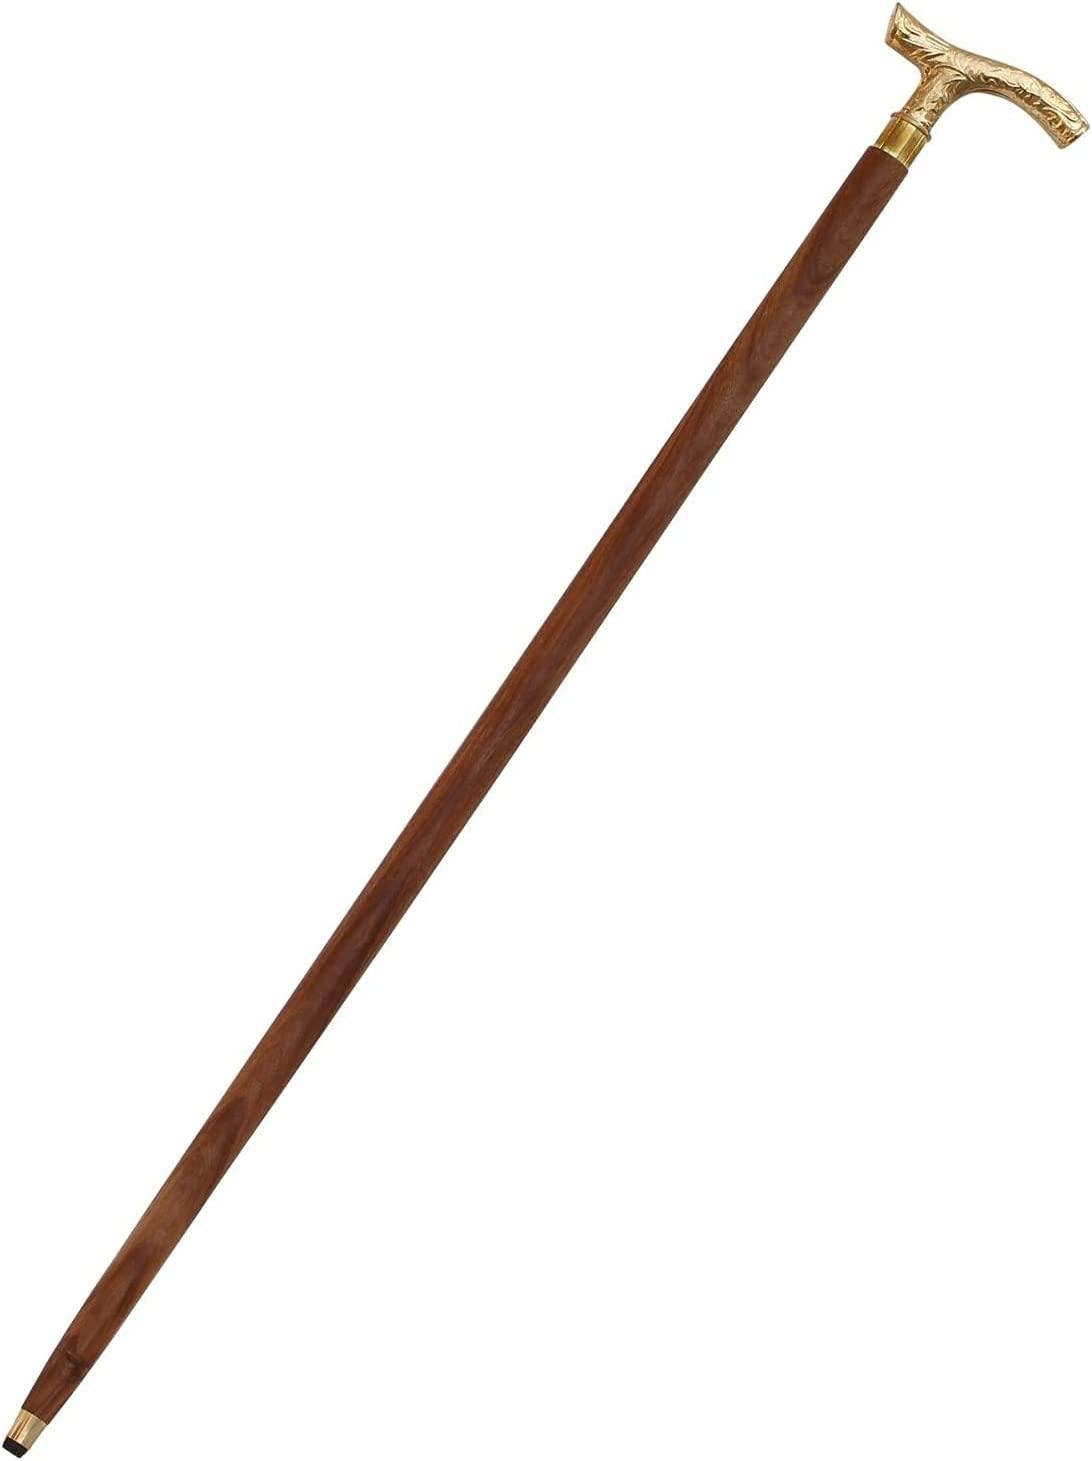 Humaira Nautical Brass Long Handle Walking Stick Cane Wooden